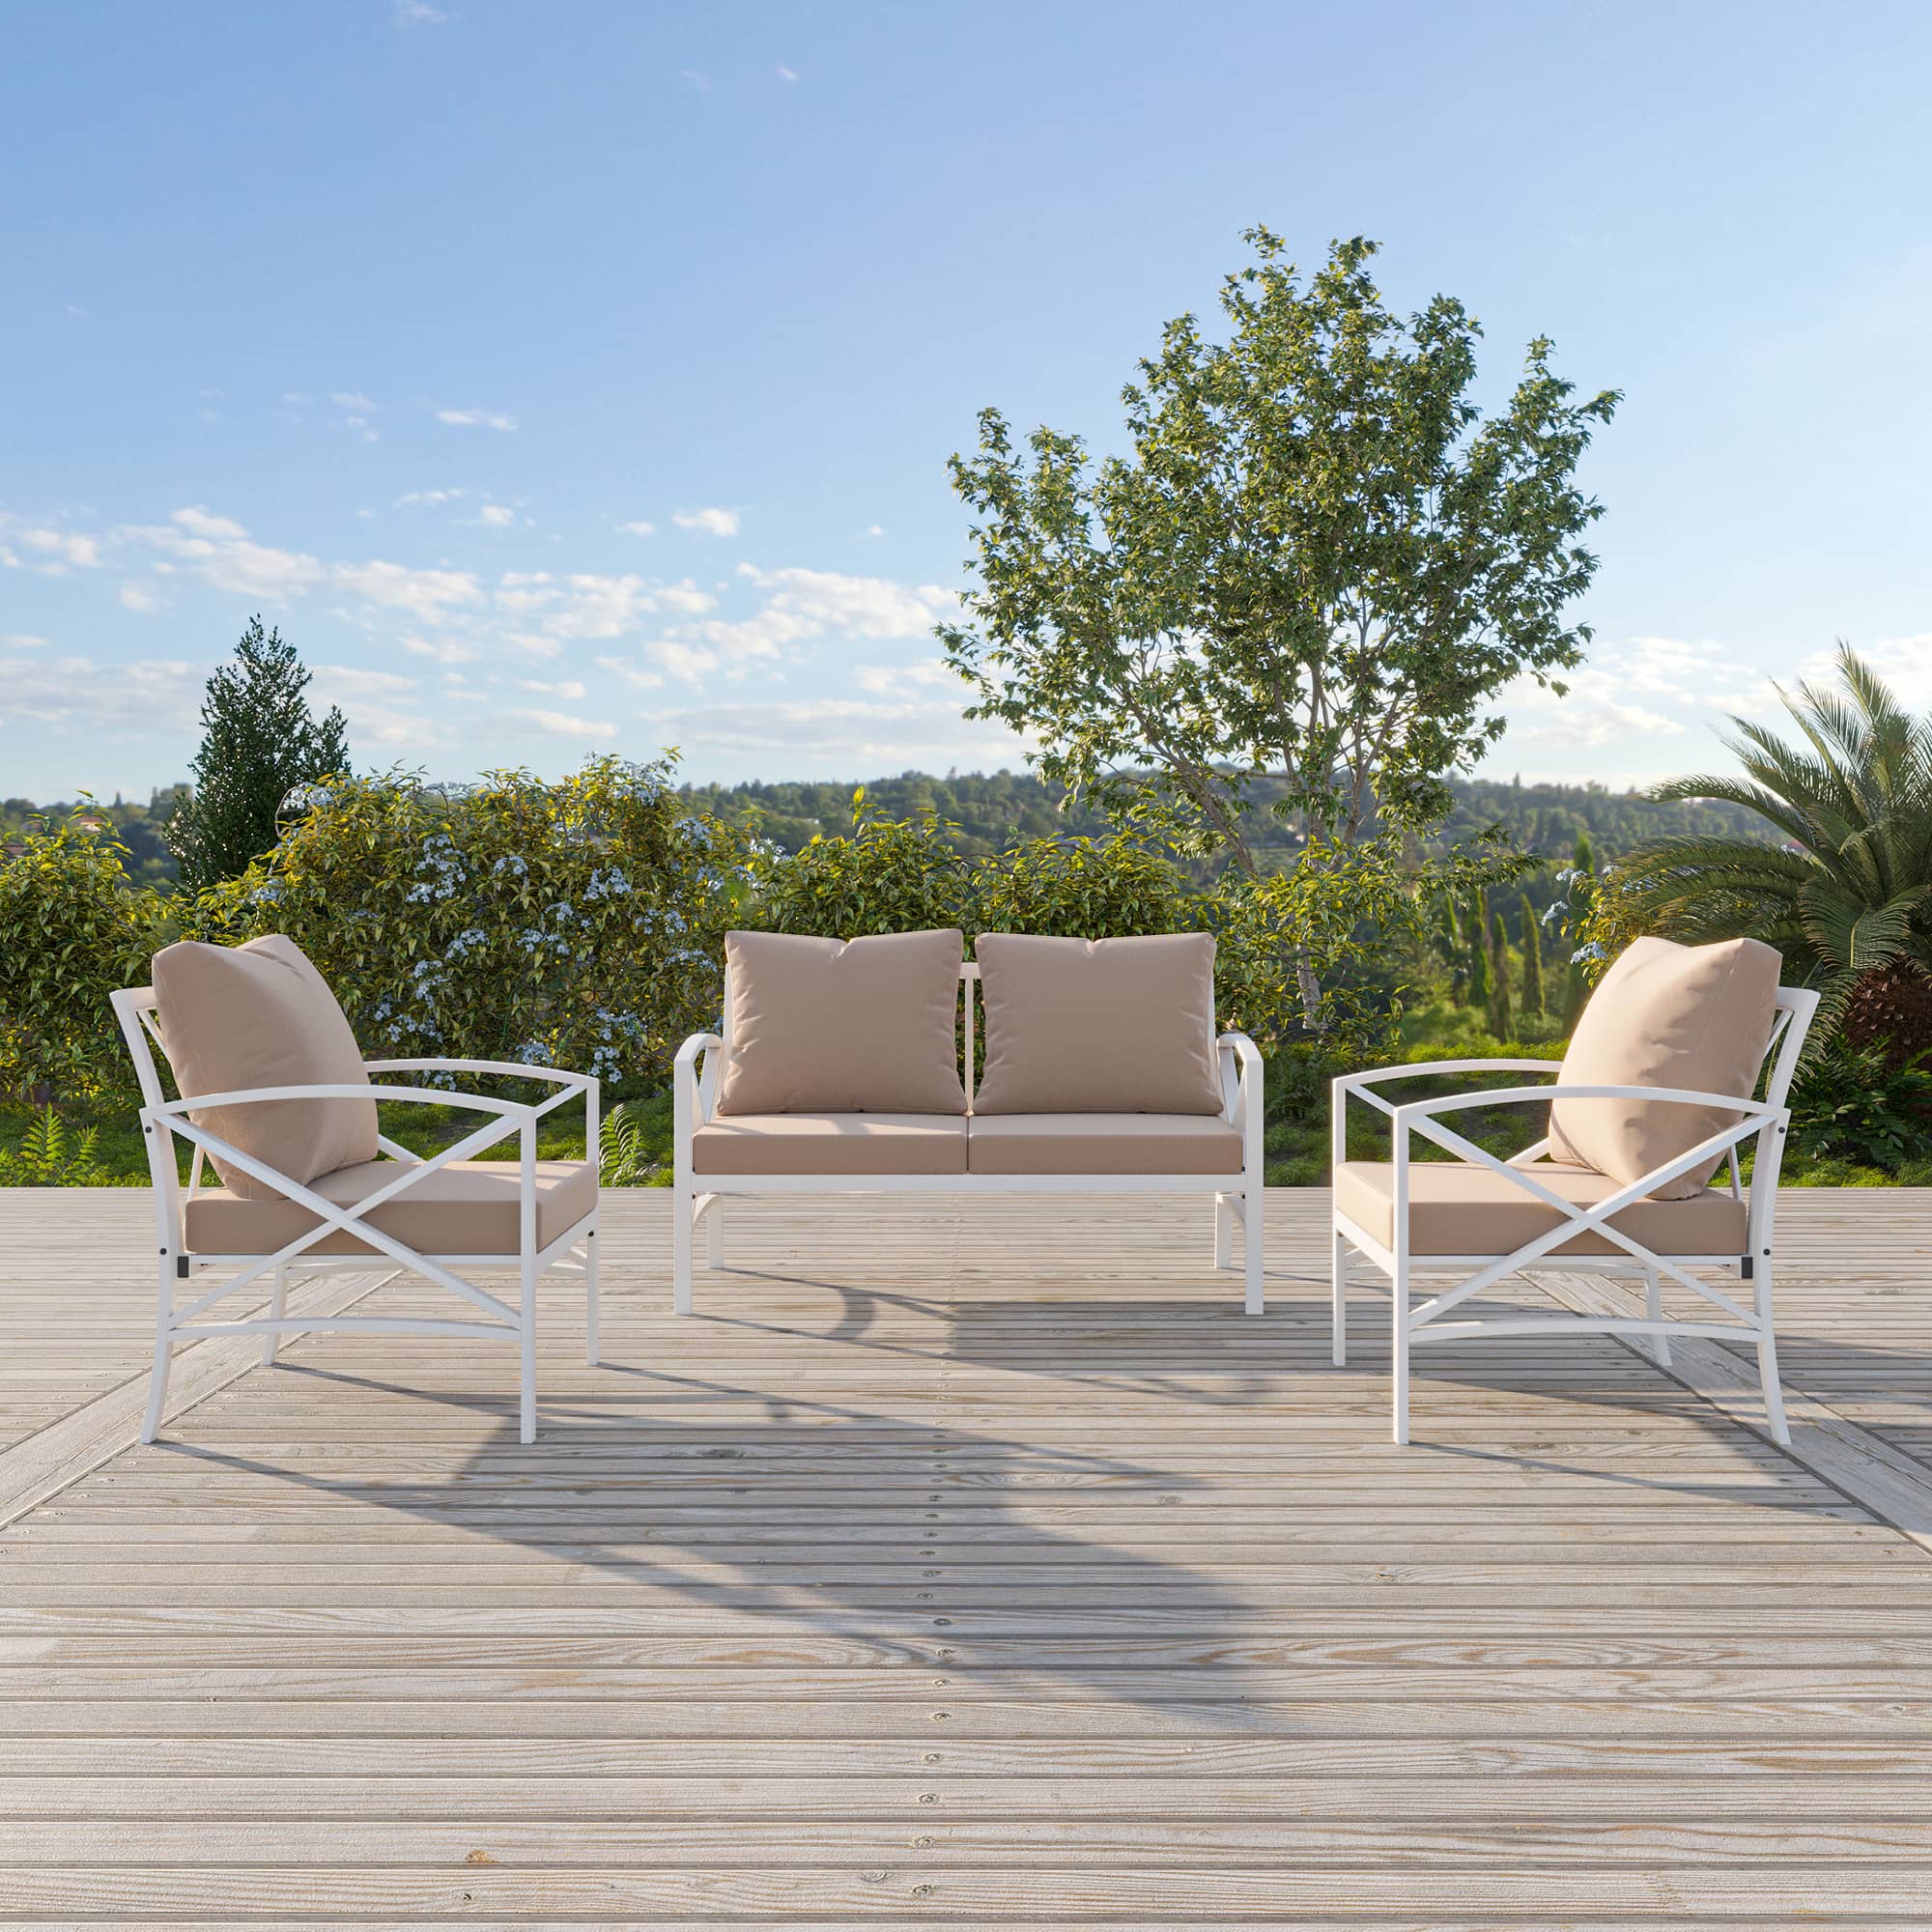 CASAINC 3 Piece Outdoor Patio Furniture White Metal Arm Sofa Set With Beige Cushions